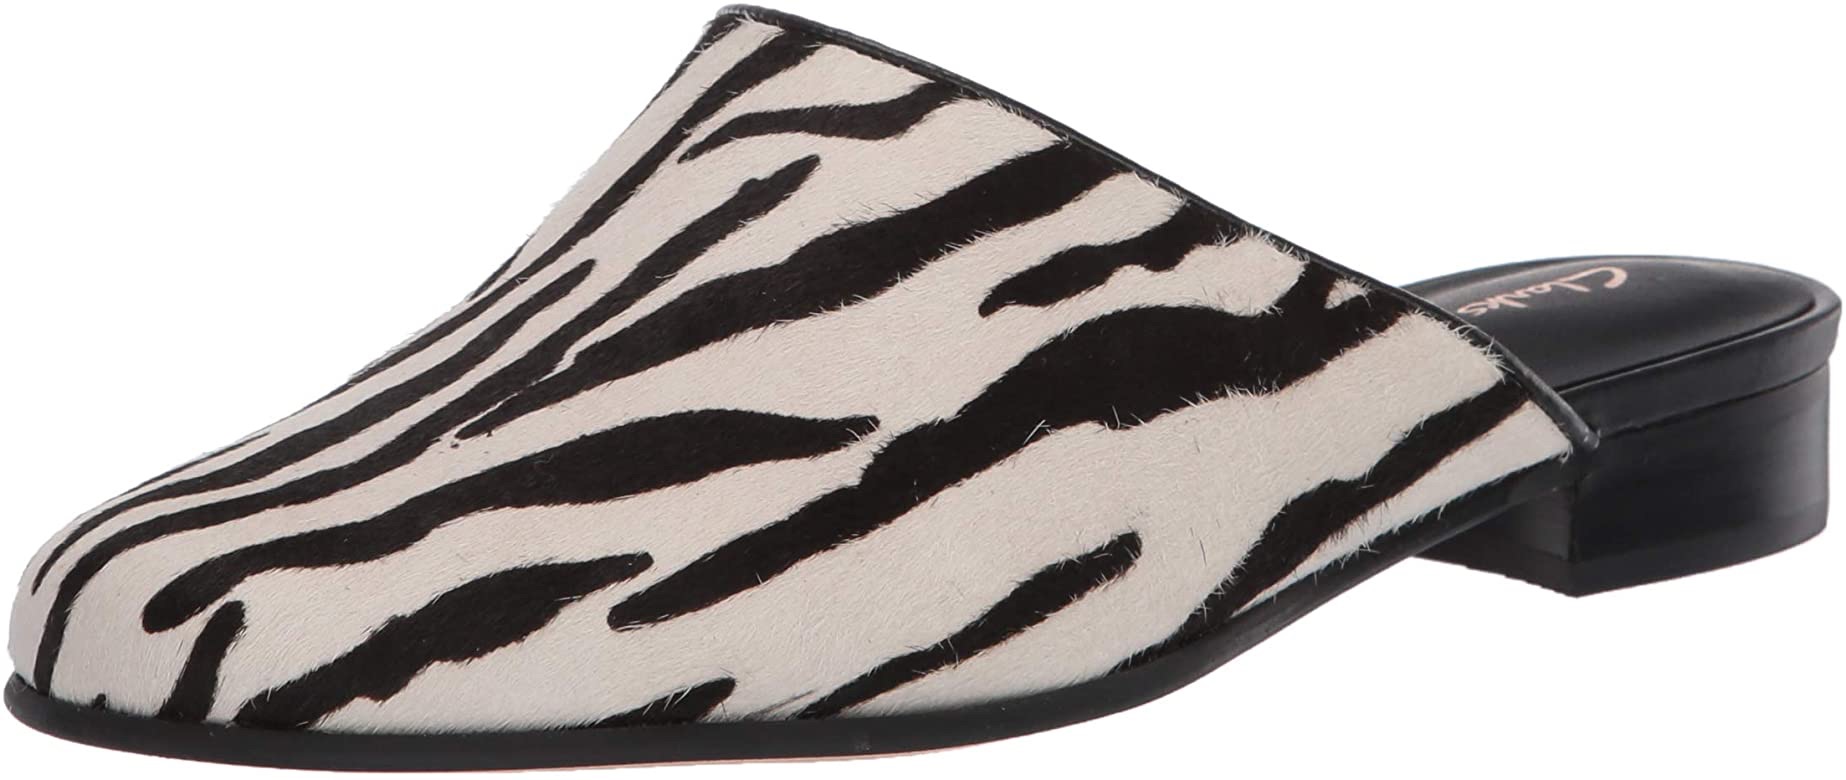 Amazon.com | Clarks Women's Pure Blush Mule, Zebra Animal Print, 6 M US | Mules & Clogs 其乐女士穆勒鞋